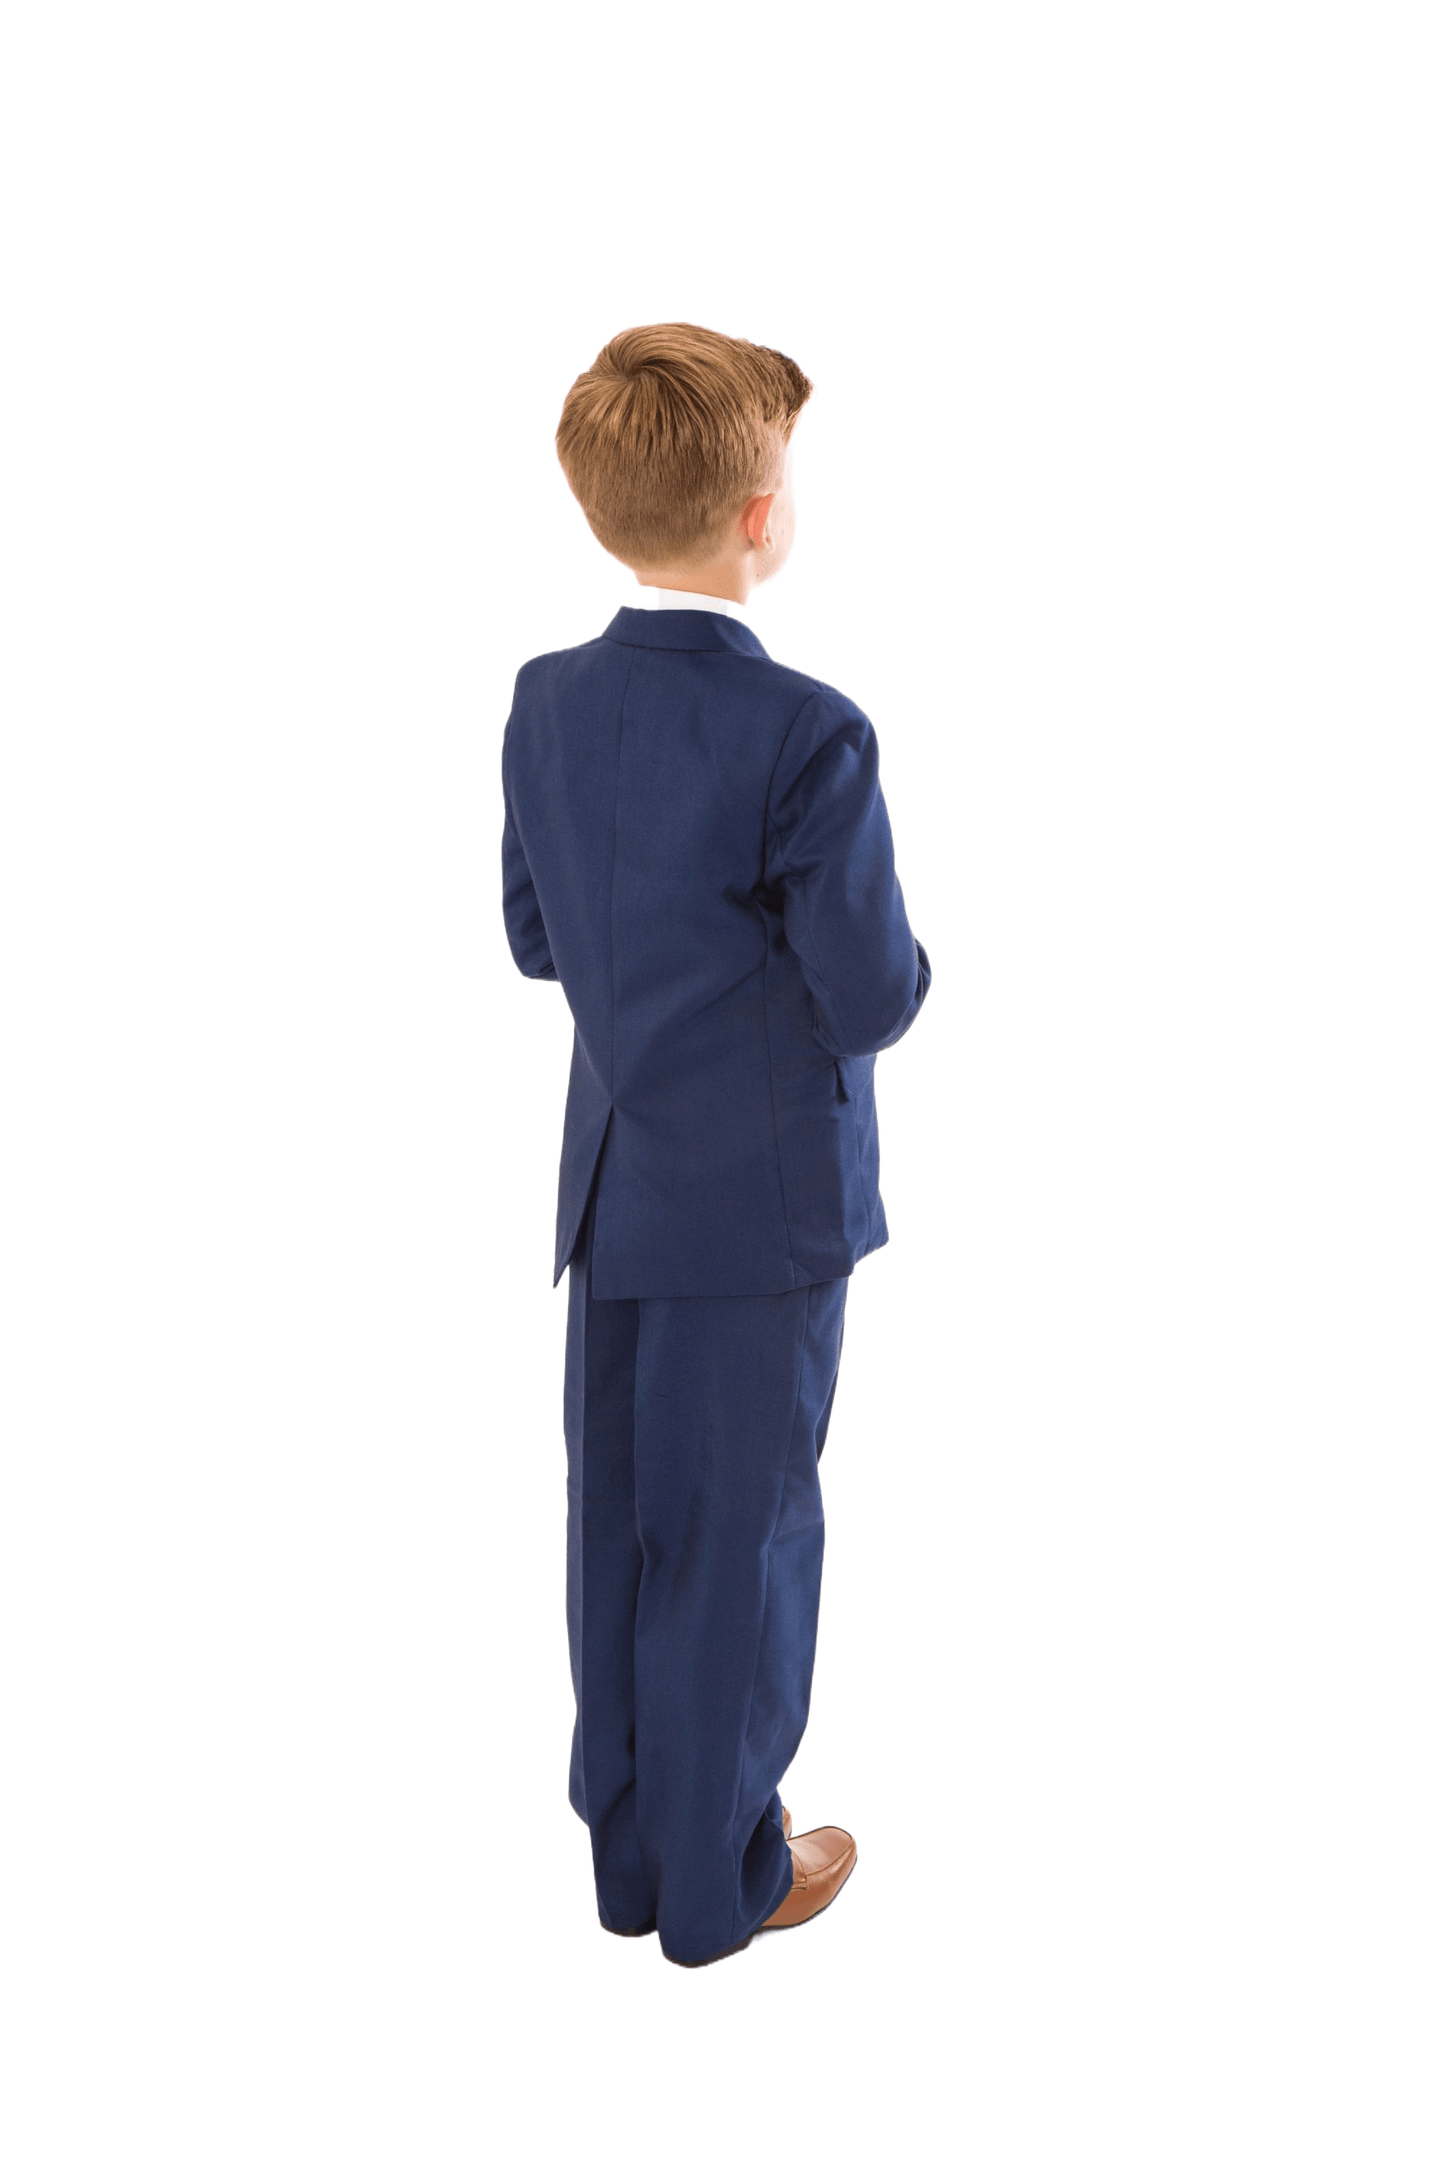 Childs Blue Three Piece Suit